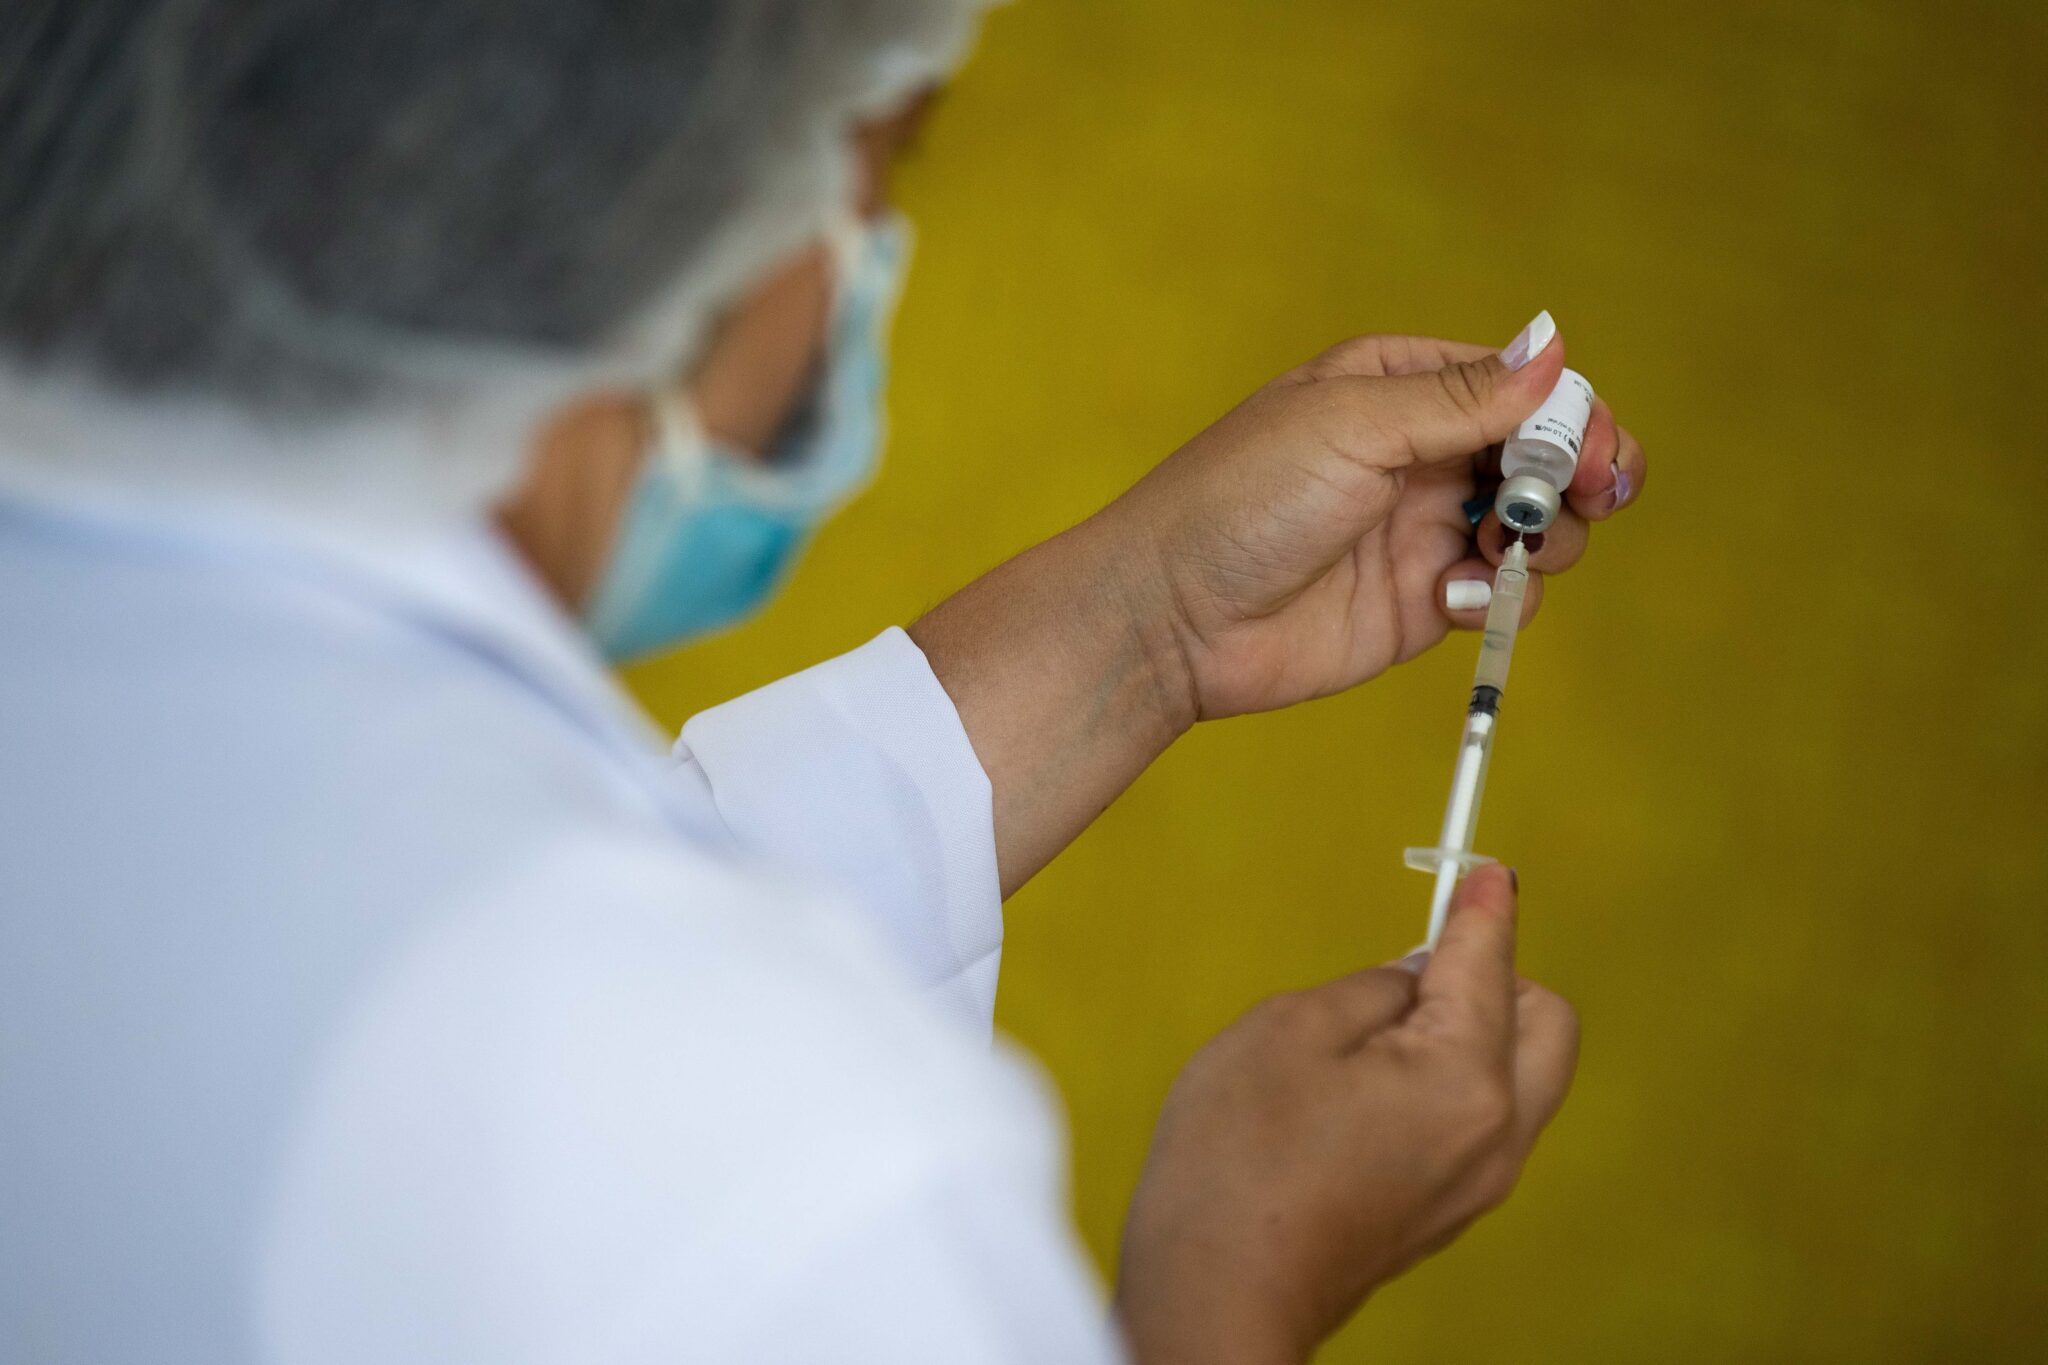 Academia Nacional de Medicina rechaza vacunación a niños con dosis cubanas